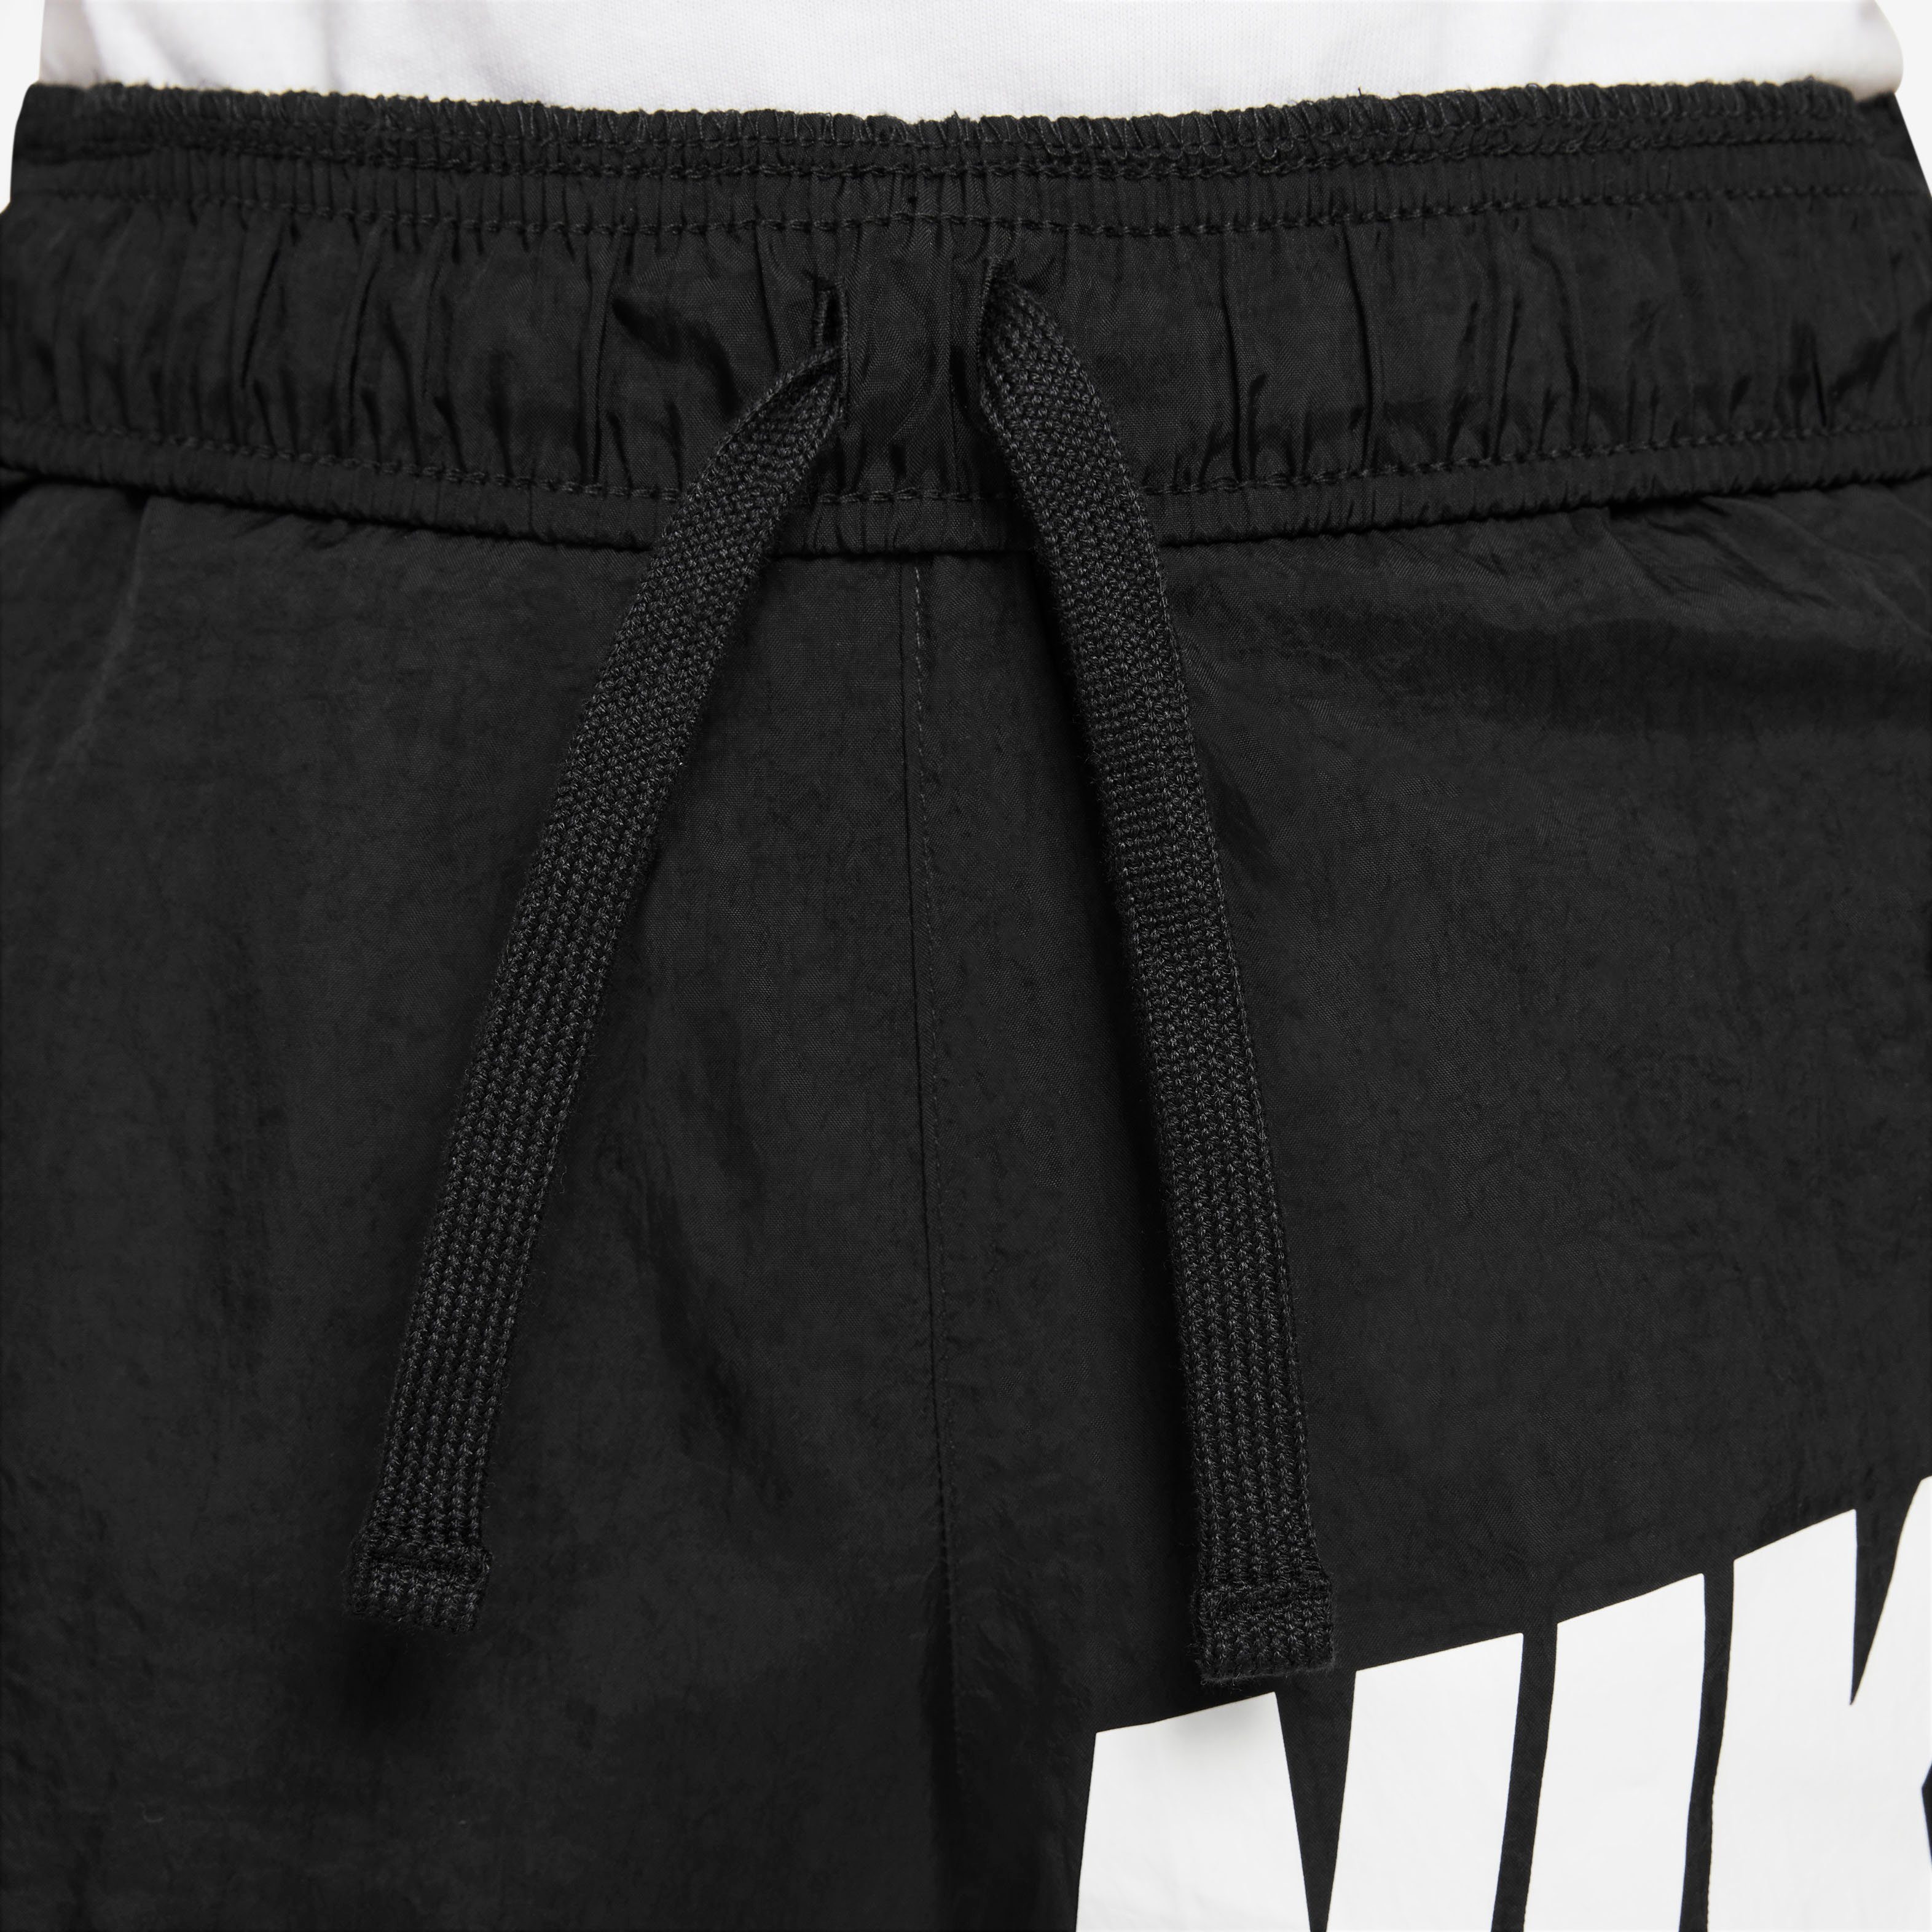 Shorts Sportswear (Boys) Kids' schwarz Big Woven Nike Shorts